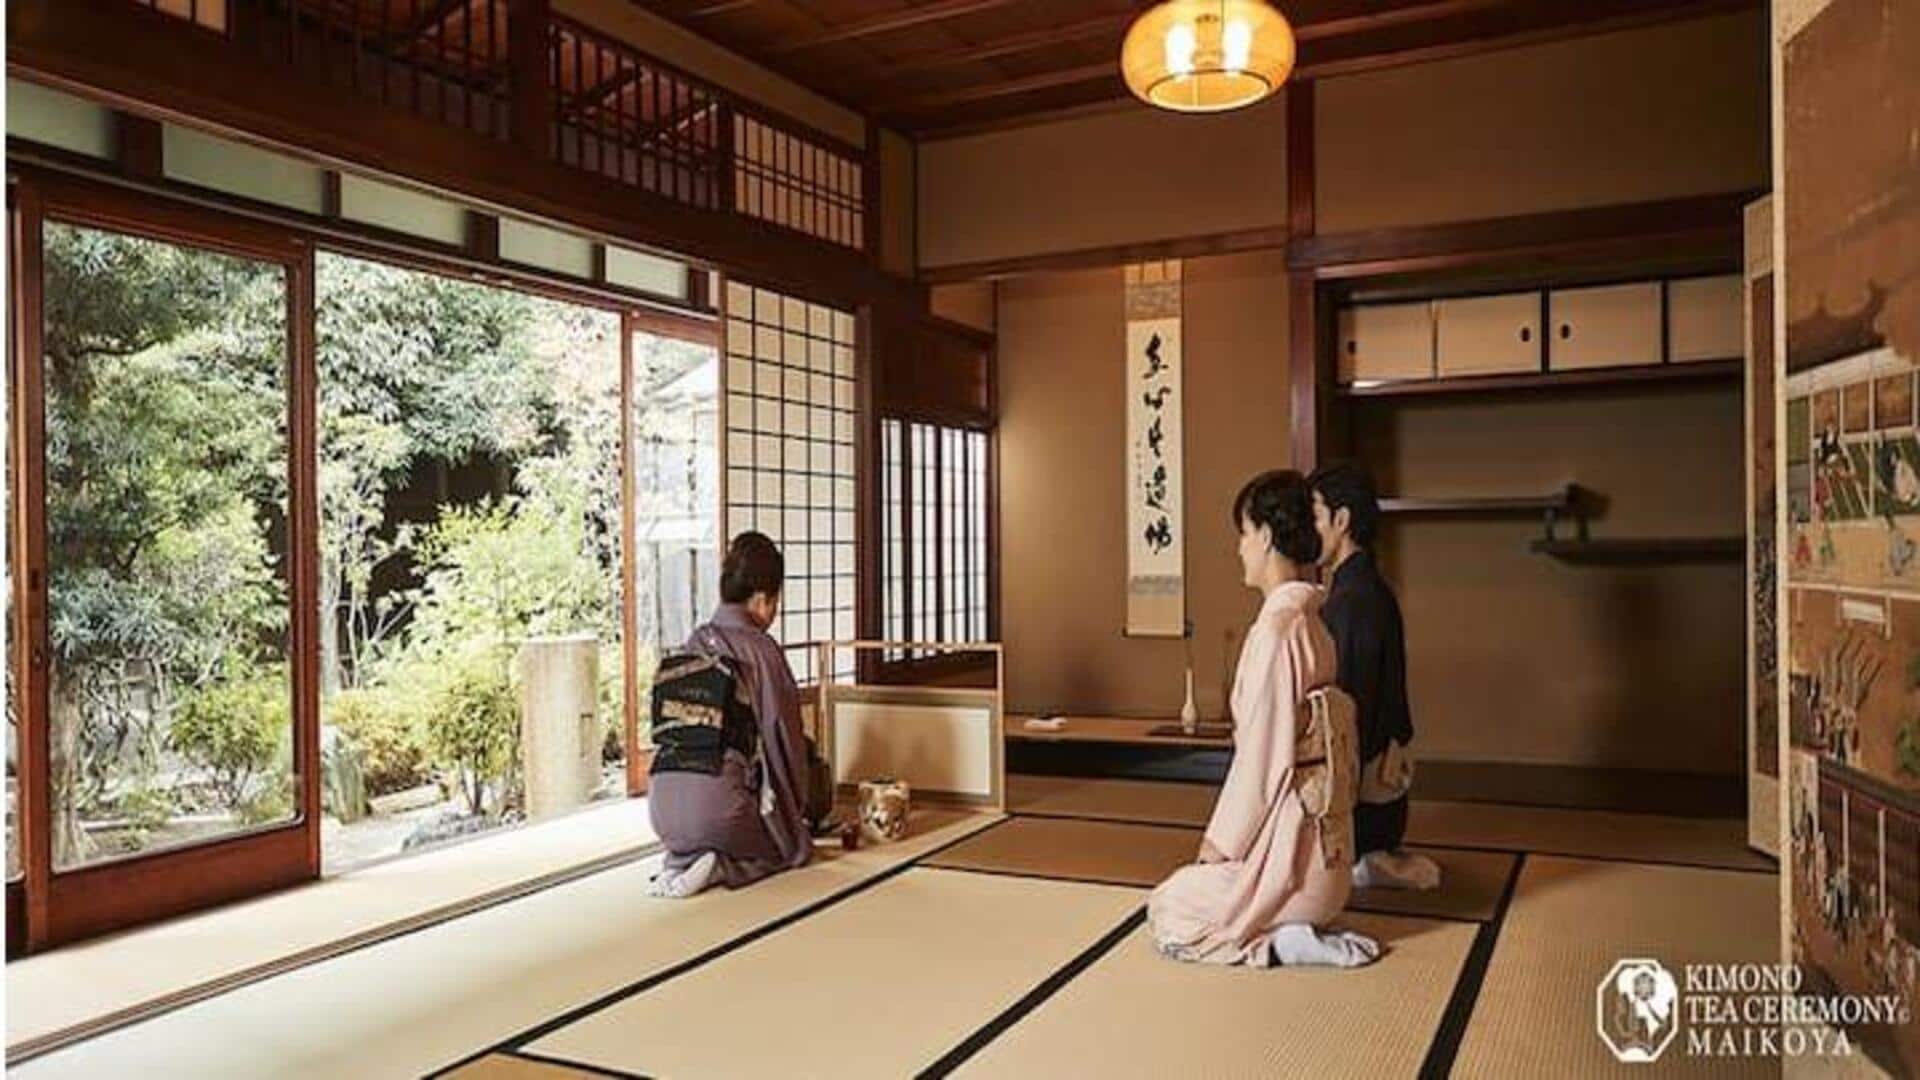 Selidiki Budaya Kimono Jepang Lewat Artikel Ini